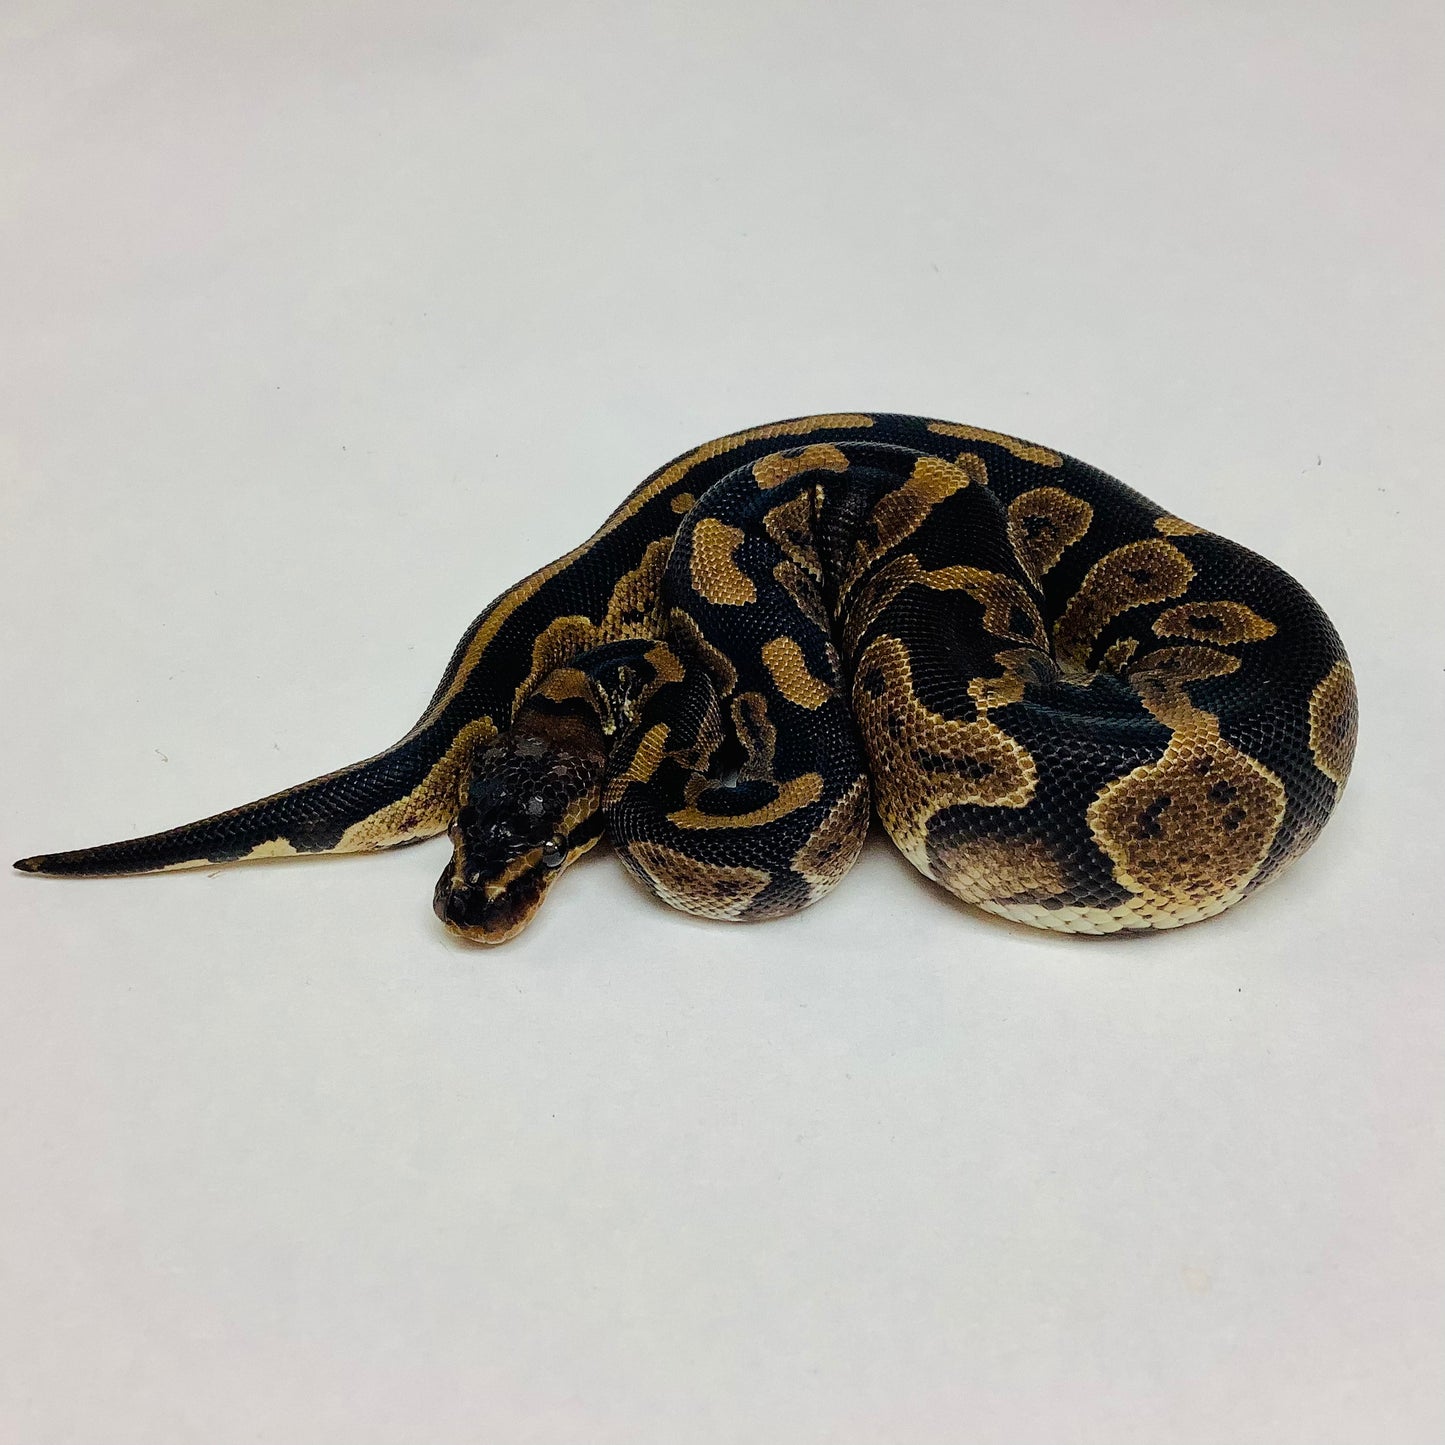 Mahogany Het Pied Ball Python -Male #2022M01